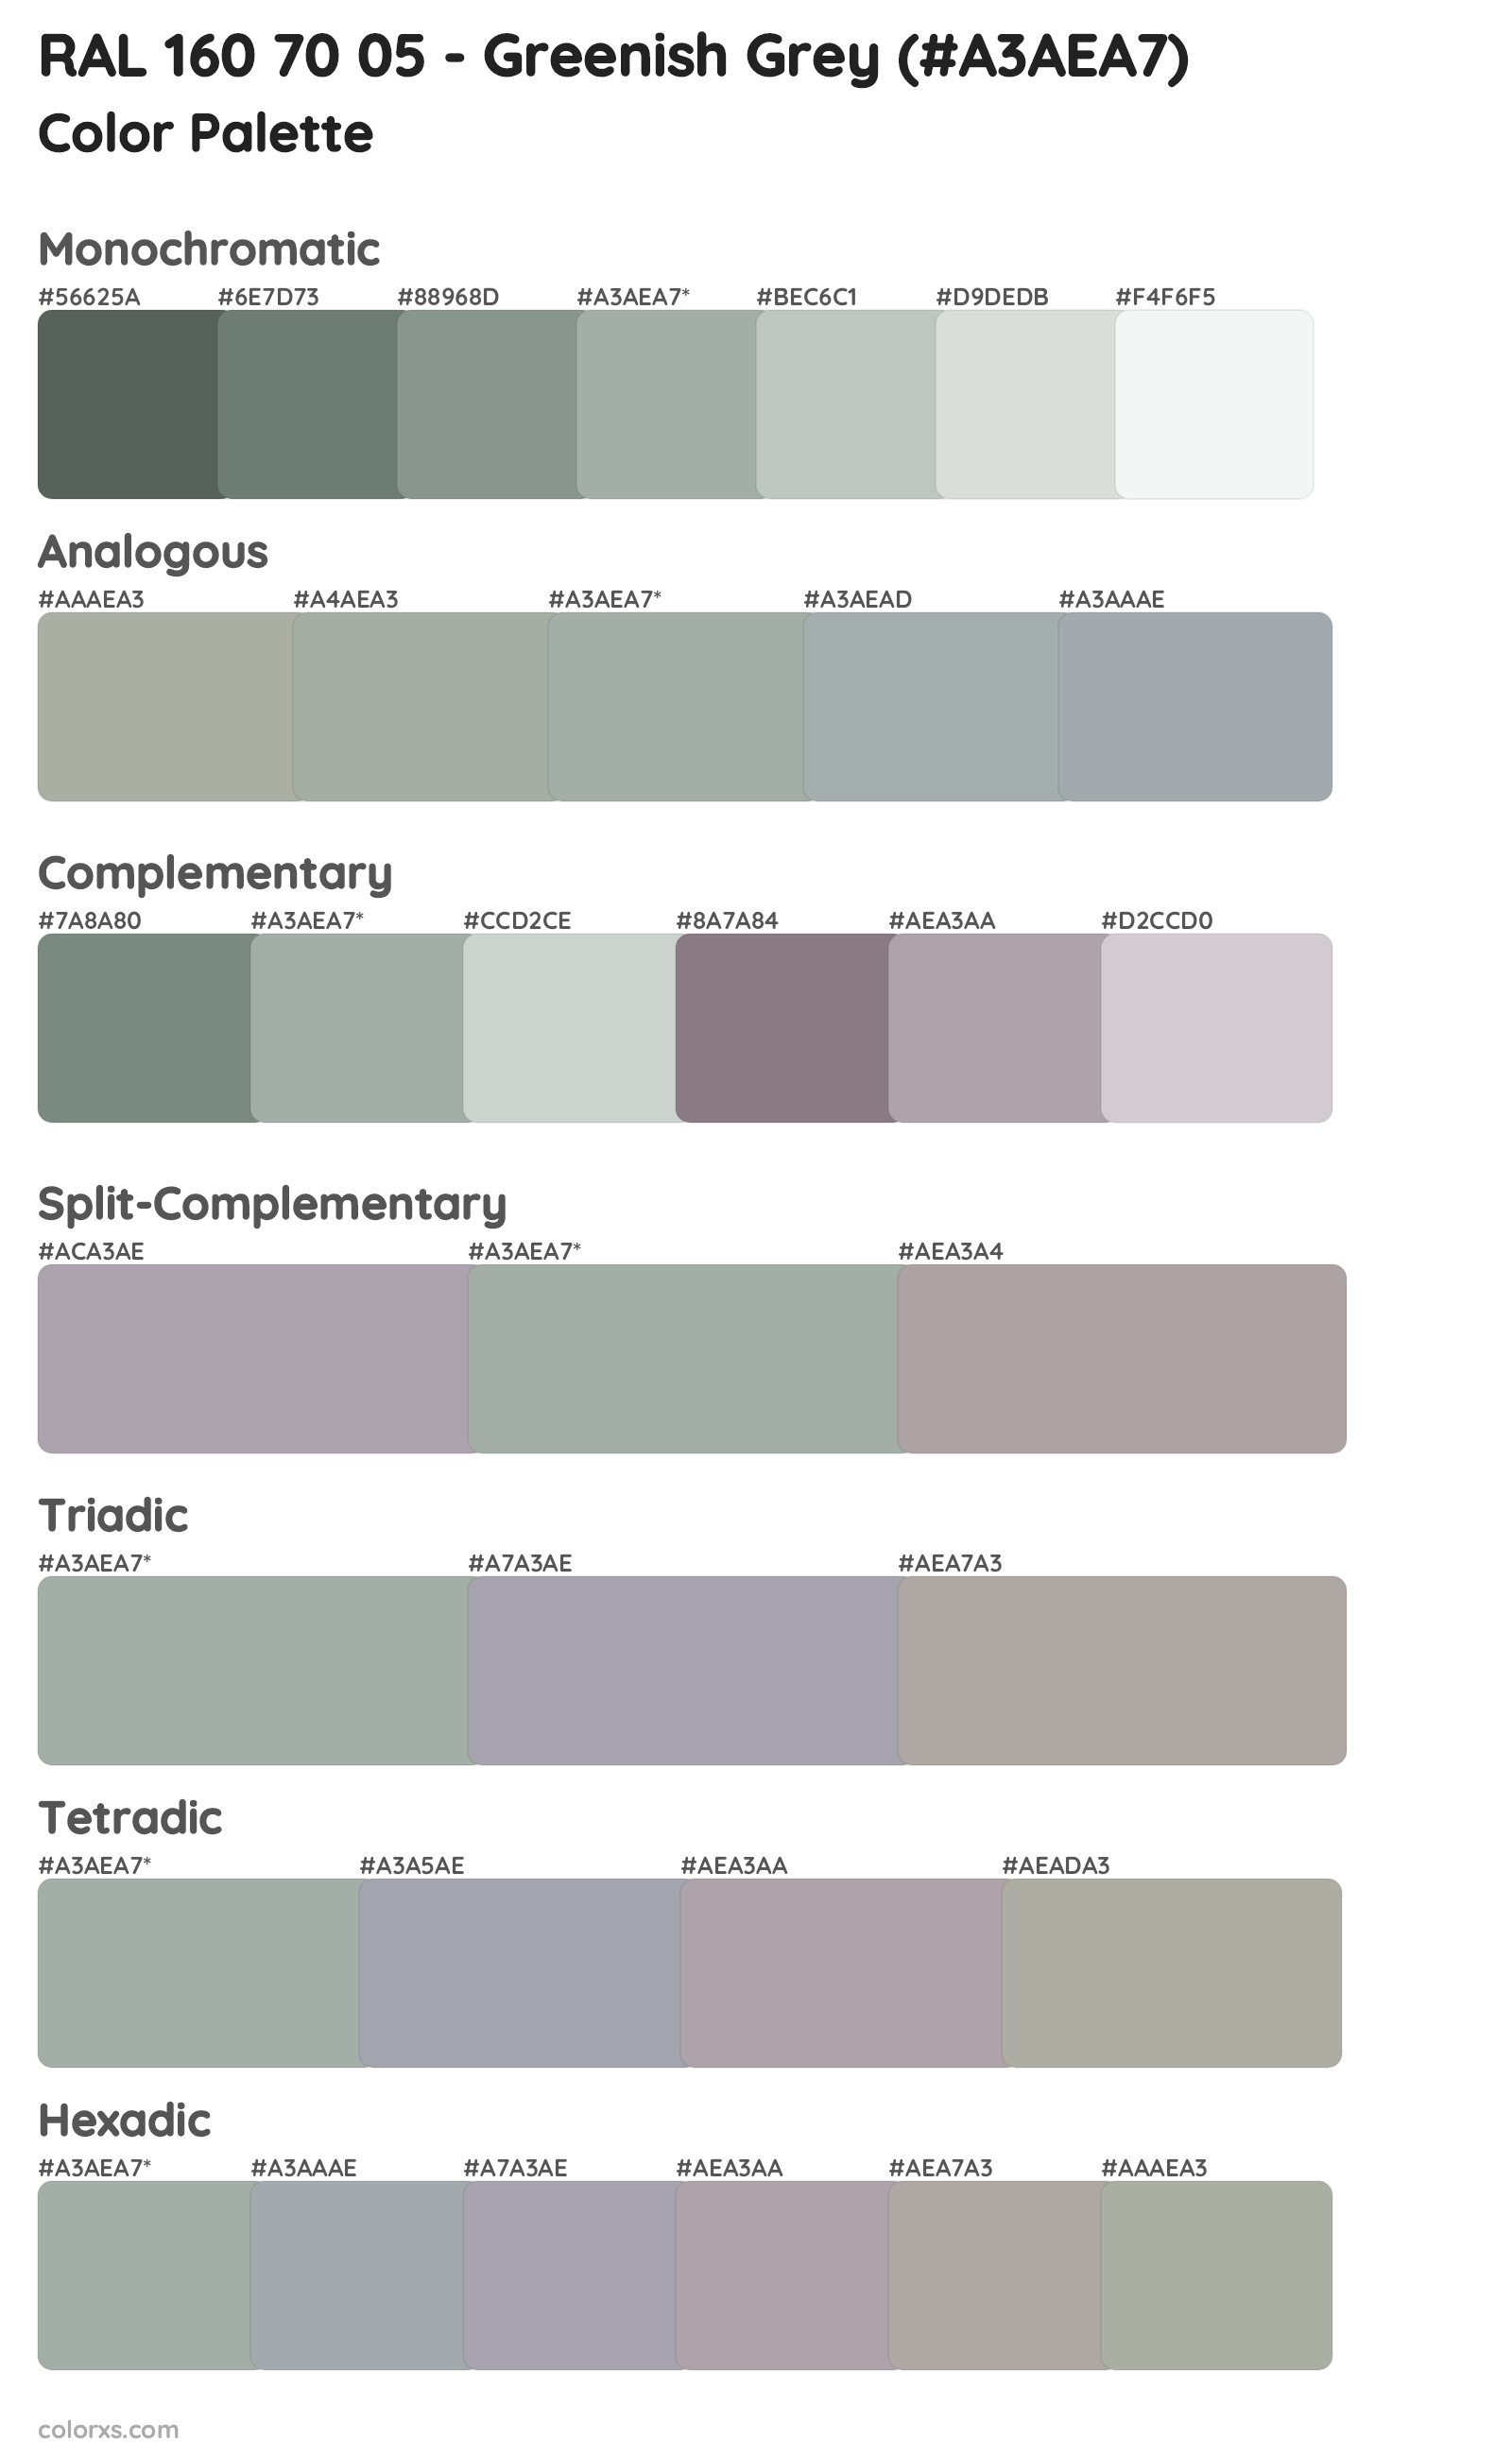 RAL 160 70 05 - Greenish Grey Color Scheme Palettes